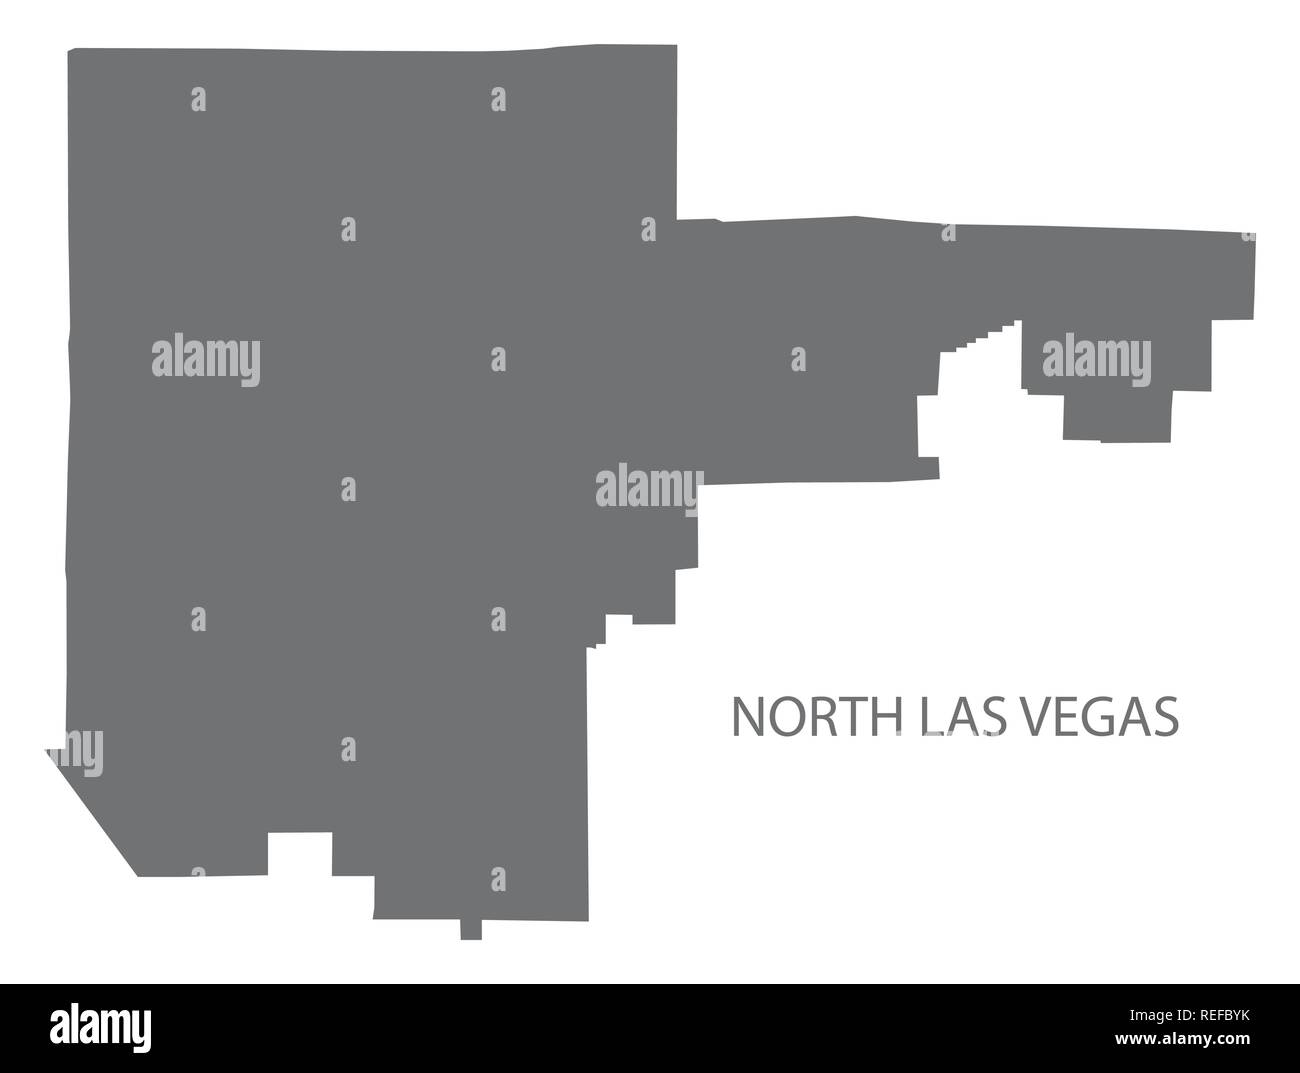 North Las Vegas Nevada City Karte grau Abbildung Silhouette Stock Vektor